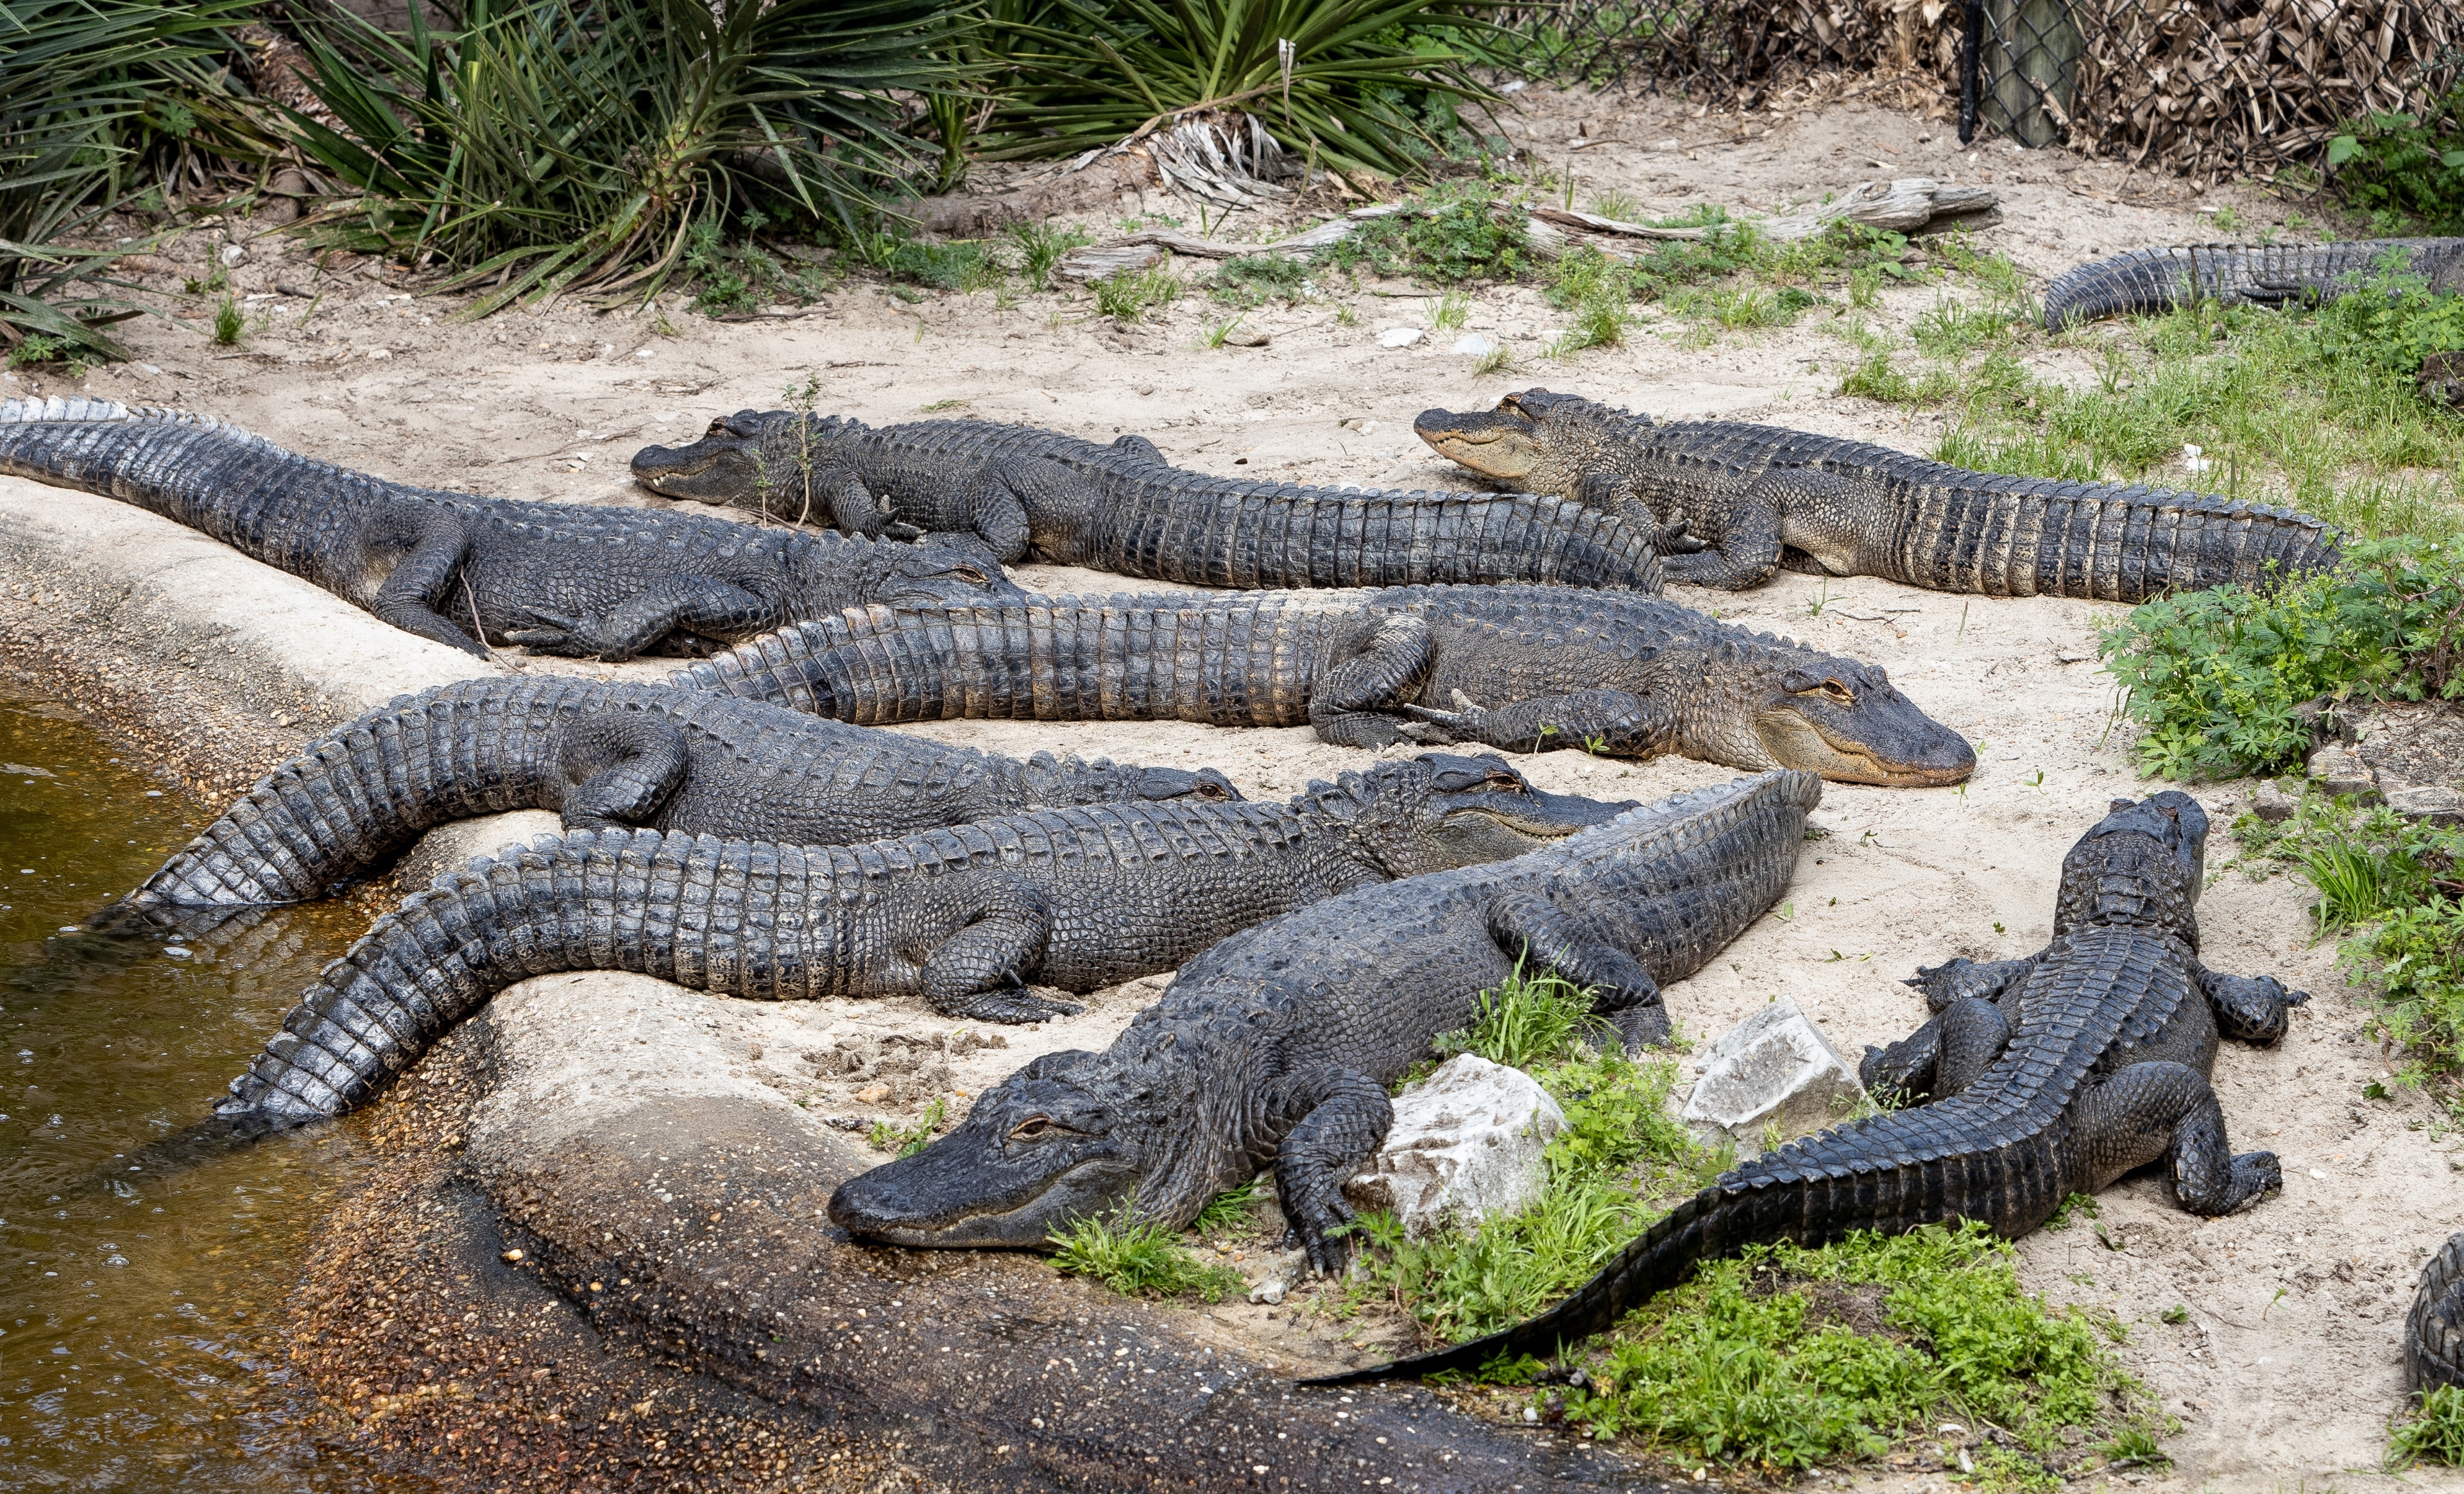 A few gators at the Gulf Breeze Zoo.